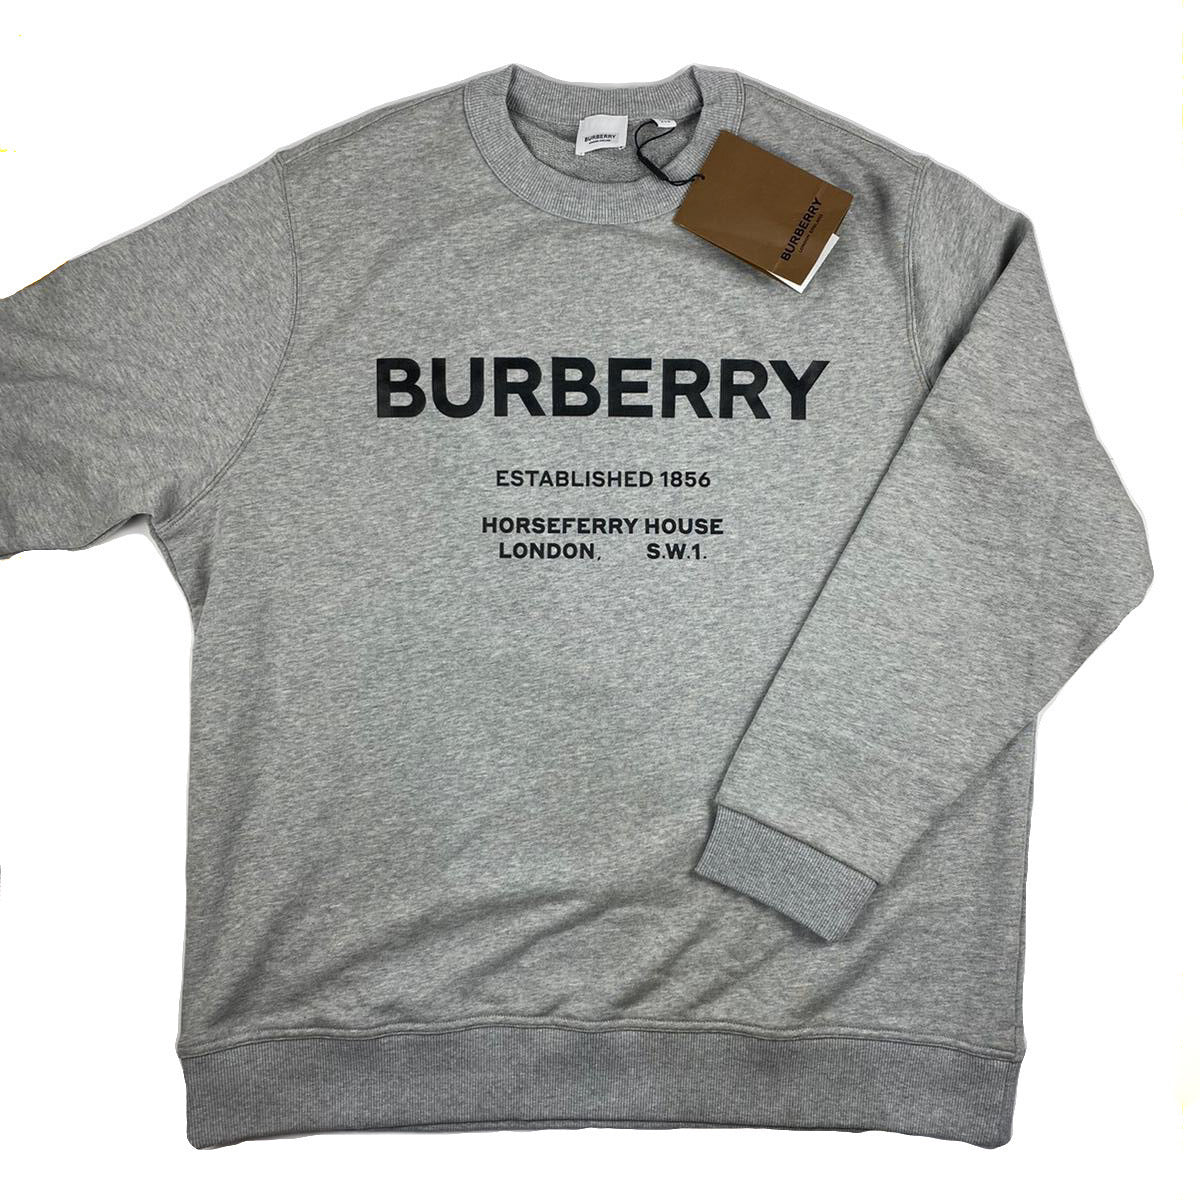 Burberry Horseferry House Print Sweatshirt Light Grey – Skint fashion ltd